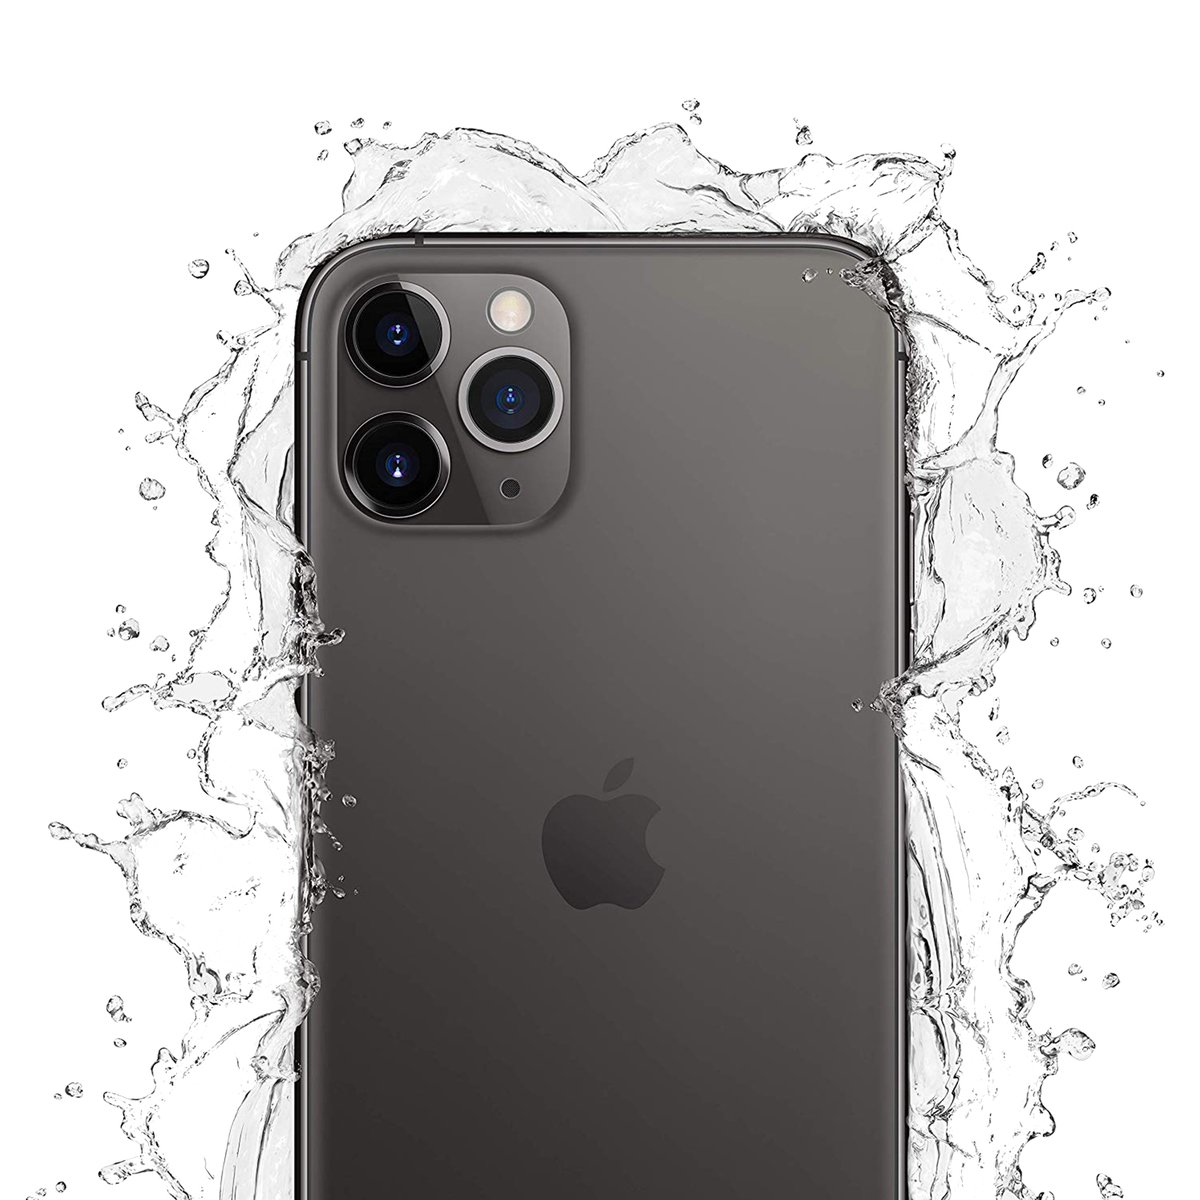 Apple iPhone 11 Pro 64GB Space Grey